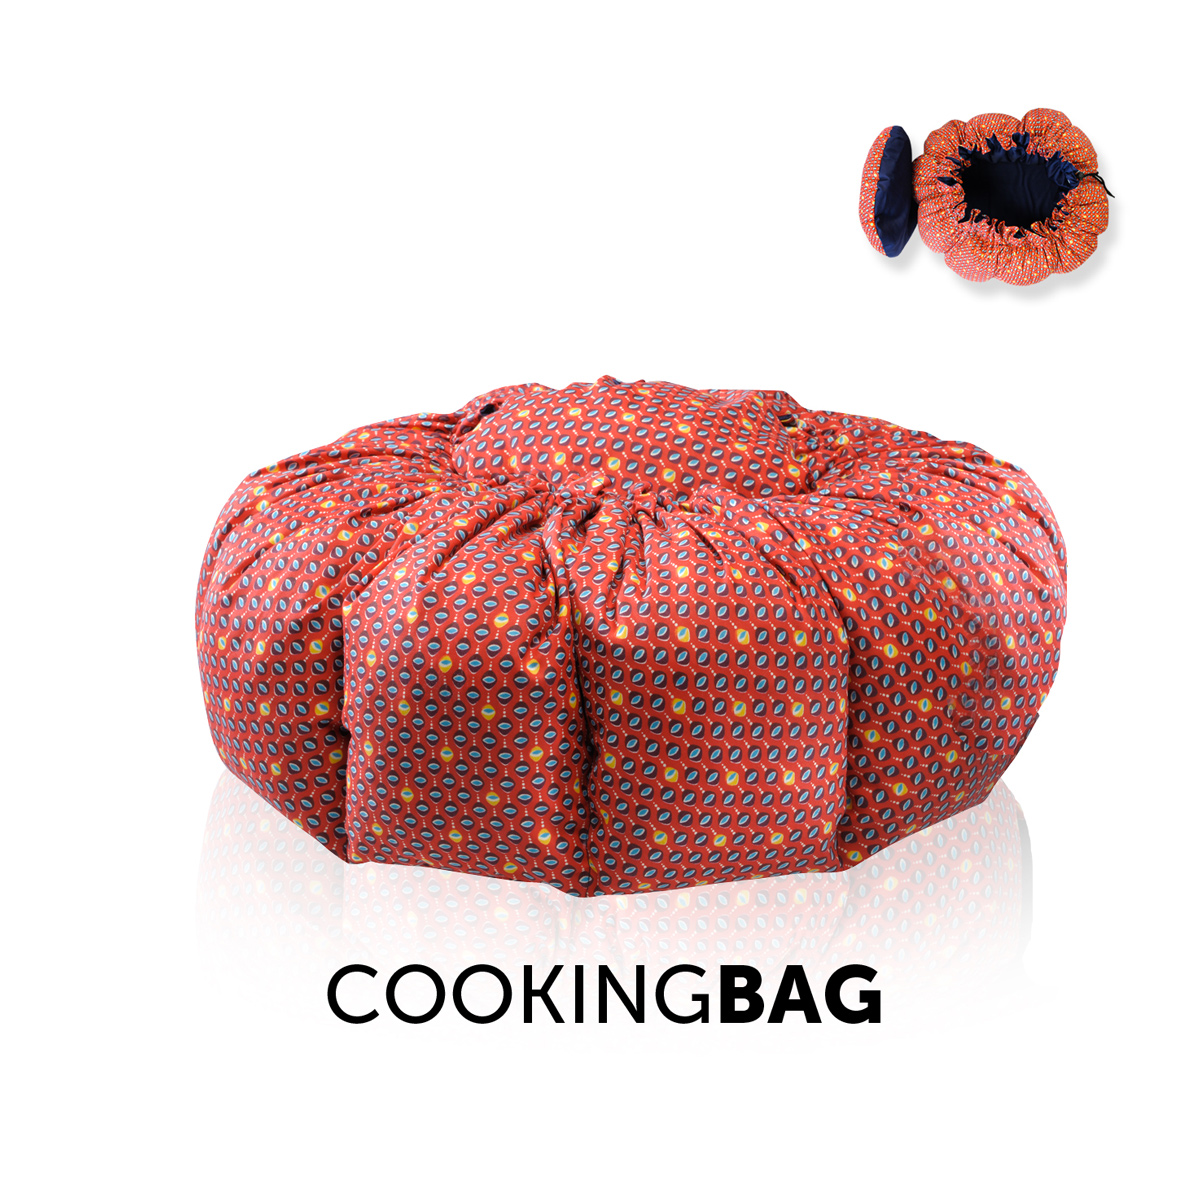 Cooking bag